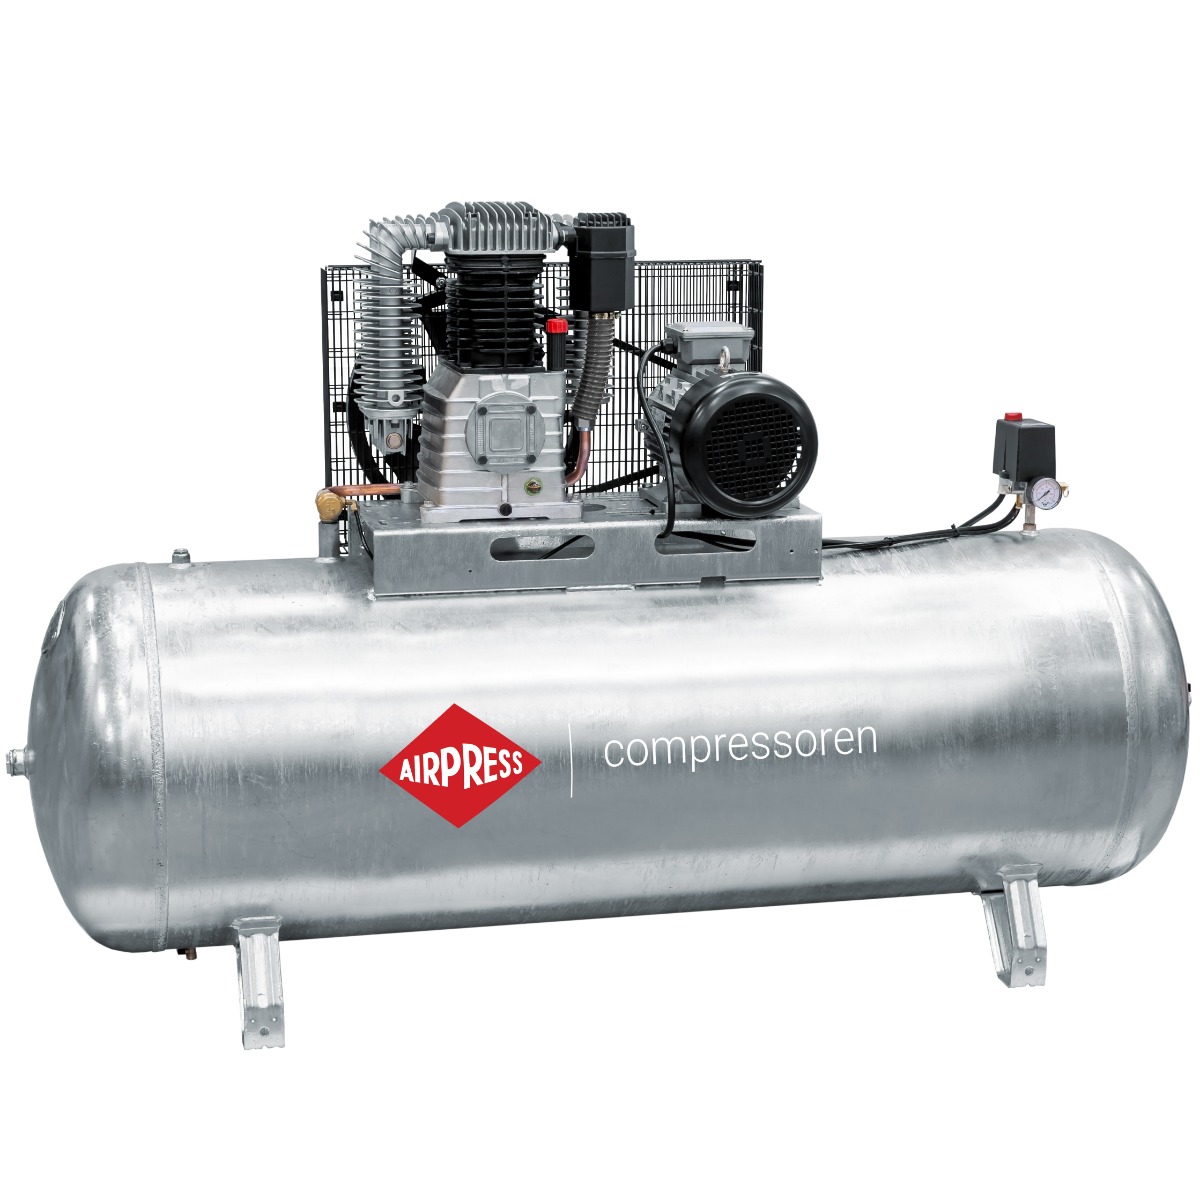 Compressor G 1000-500 Pro bar 7.5 hp 698 l/min l galvanized